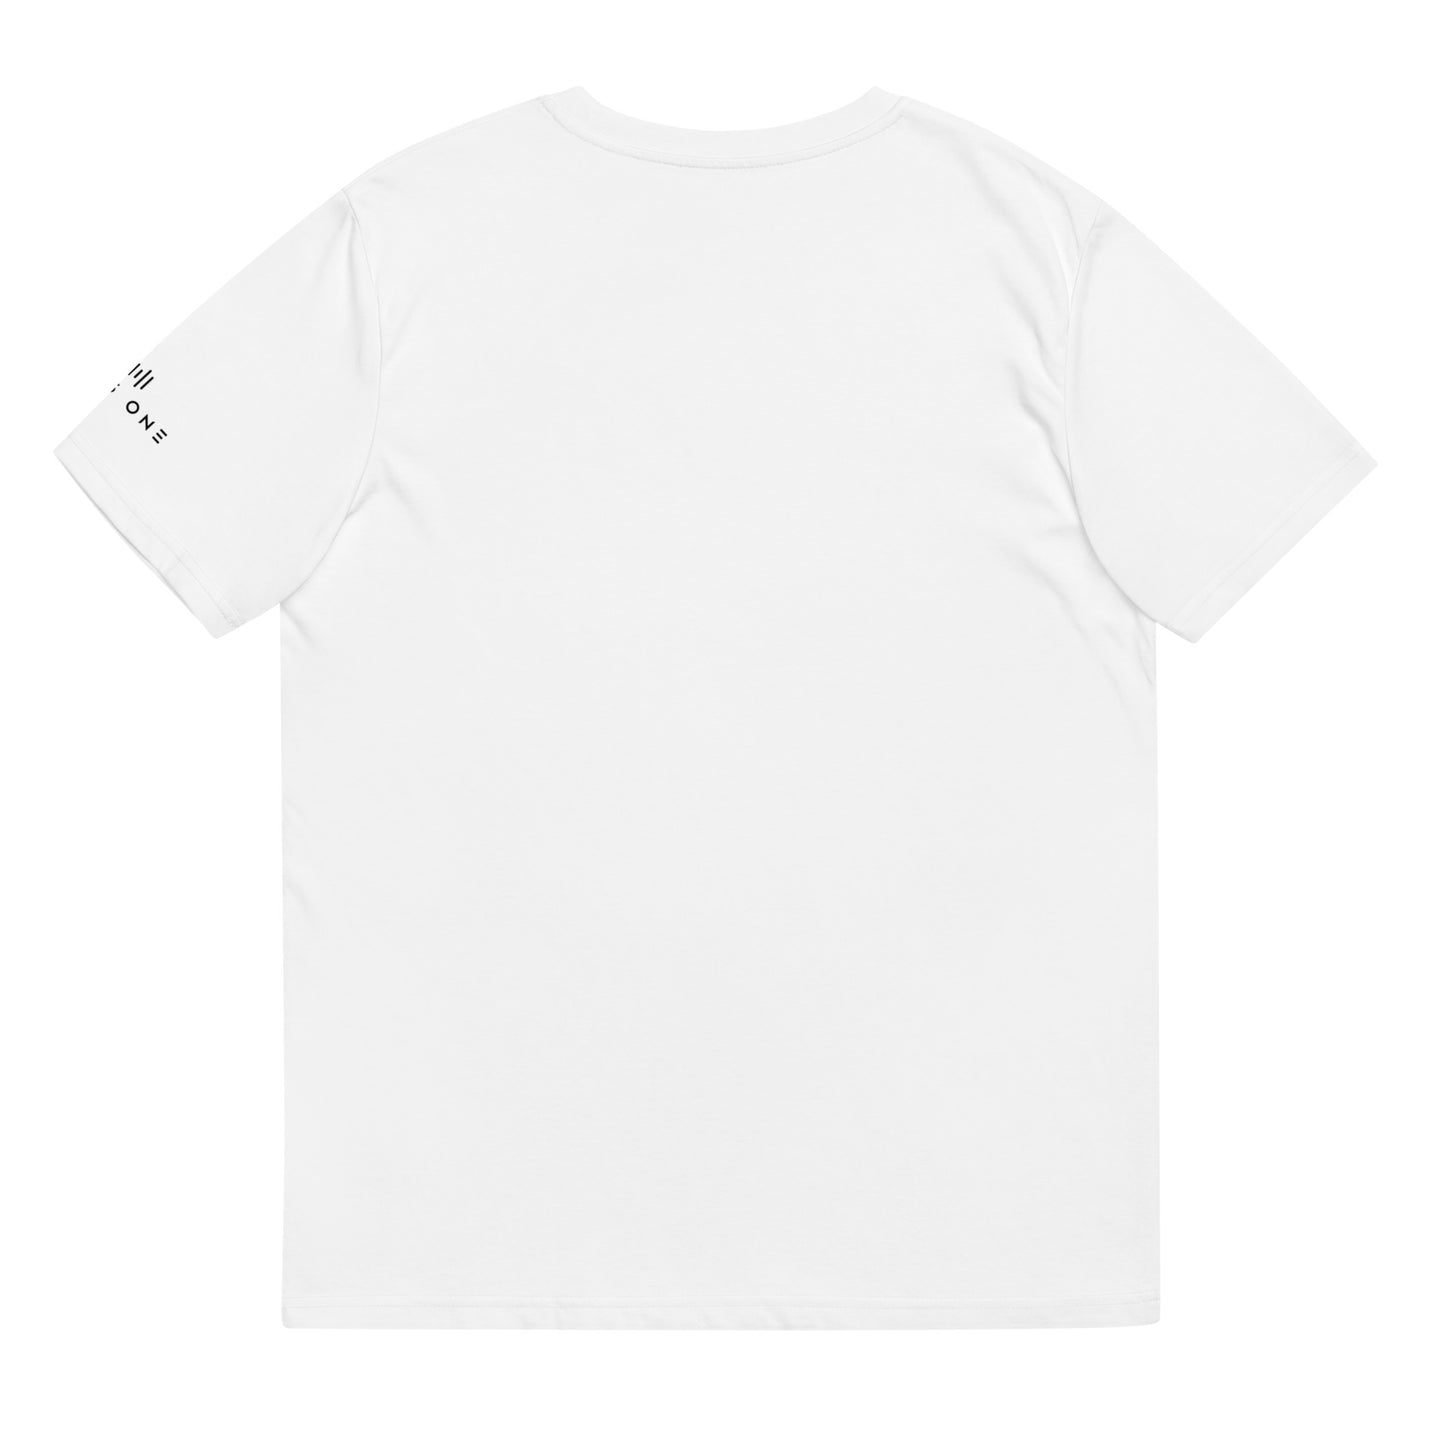 NFTM (v4) Unisex organic cotton t-shirt (Black Text)